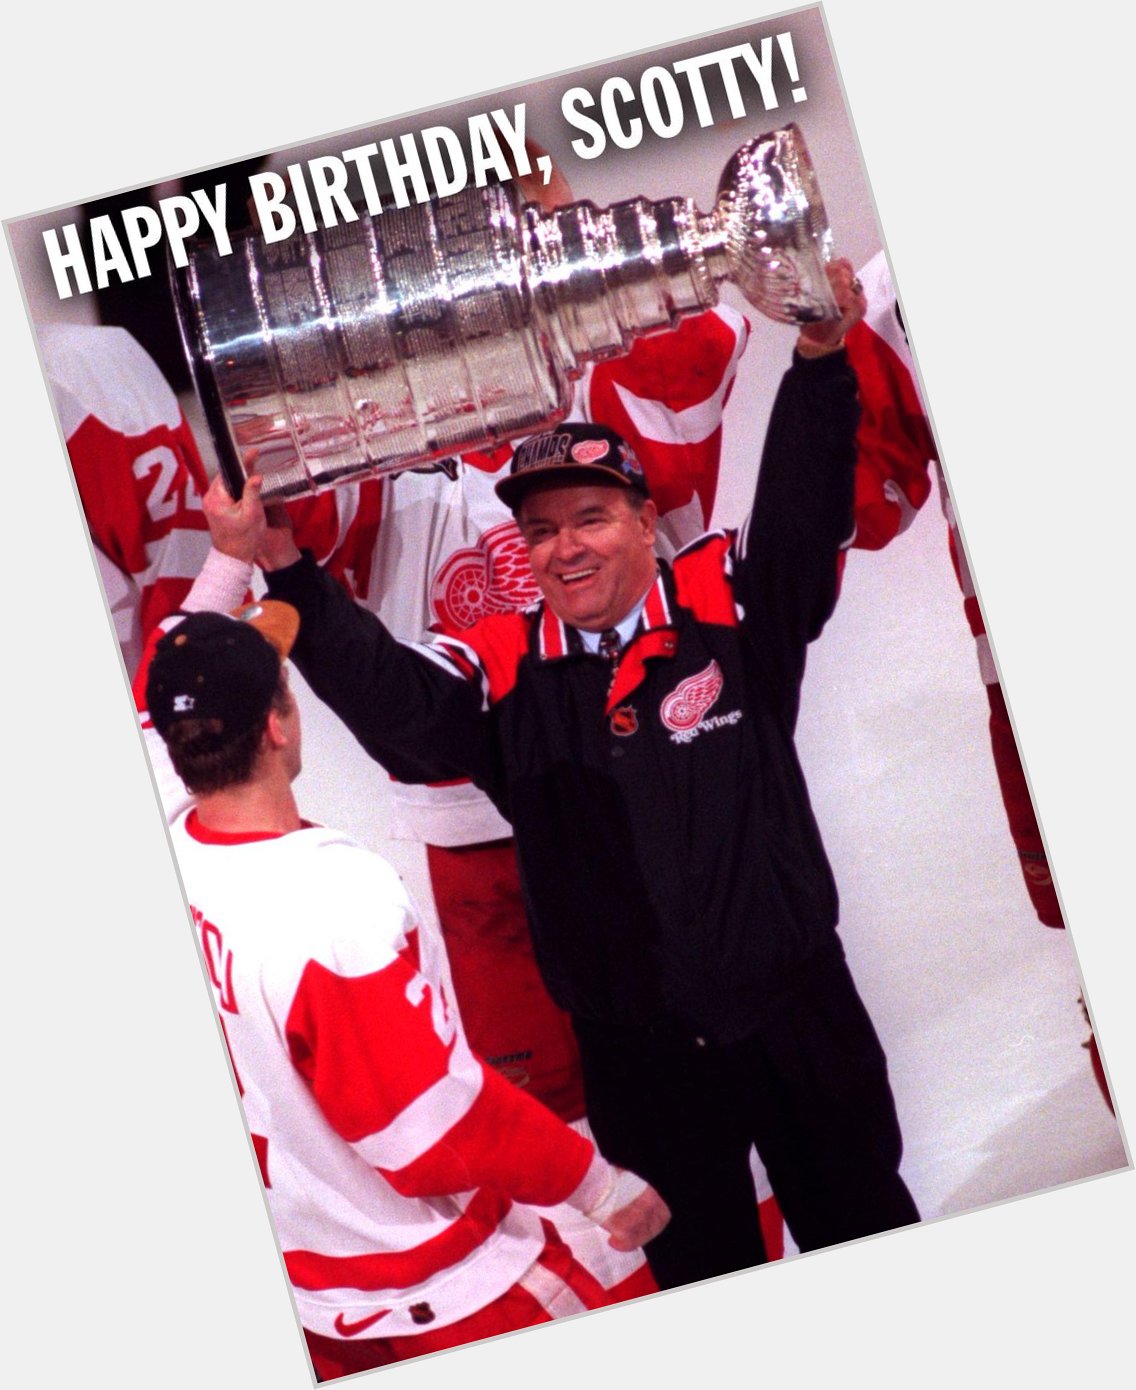 Happy birthday to former coach Scotty Bowman! 